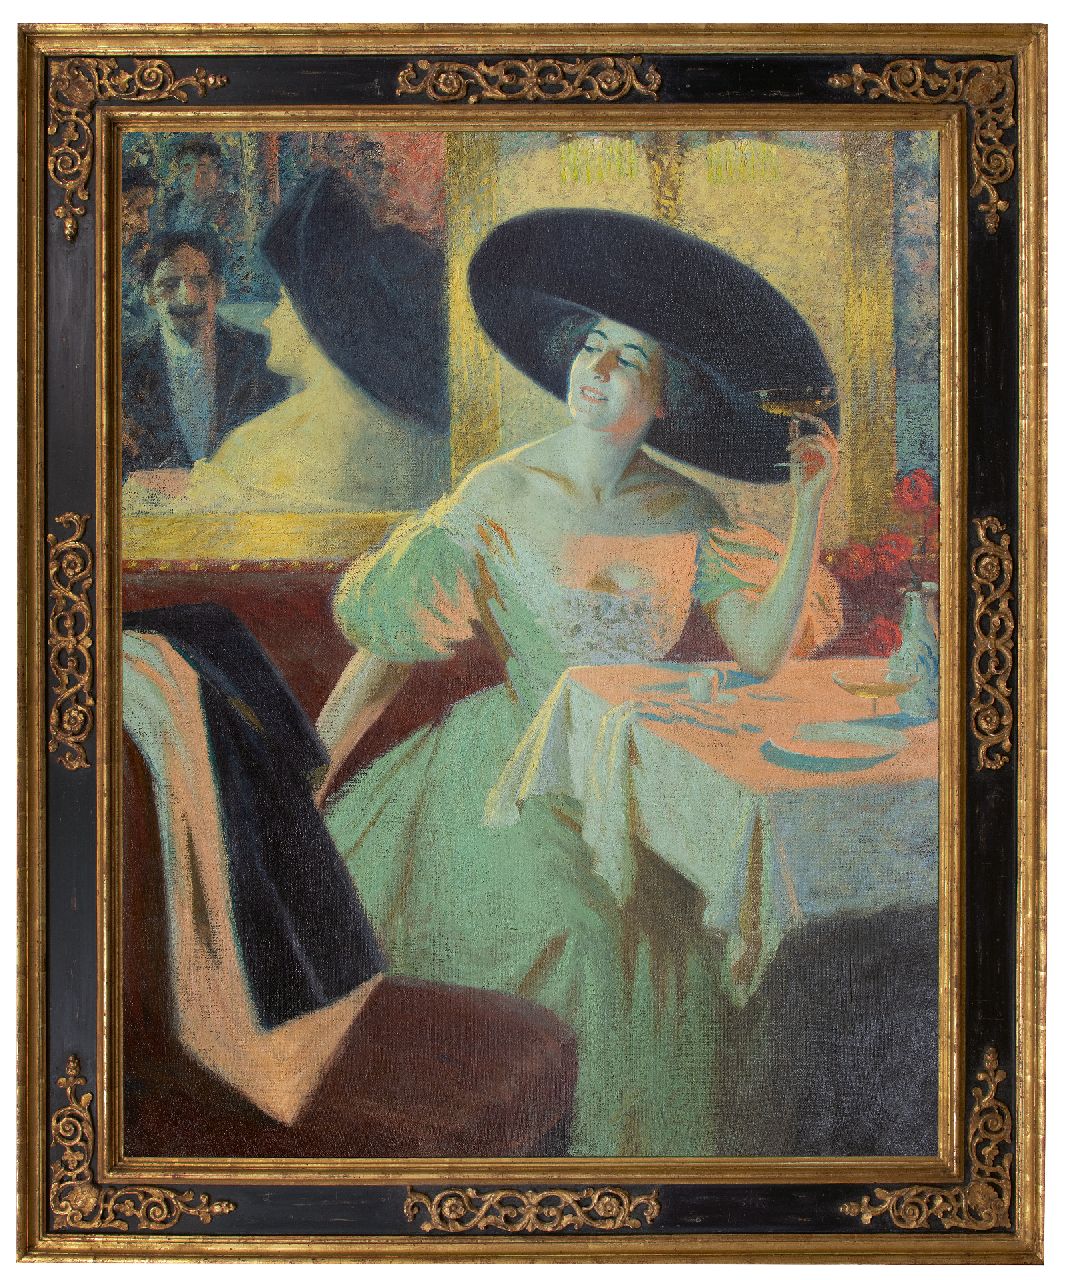 Reynolds W.J.  | 'Wellington' Jarard Reynolds | Paintings offered for sale | Au Café Parisienne, oil on canvas 142.5 x 112.5 cm, signed on the reverse